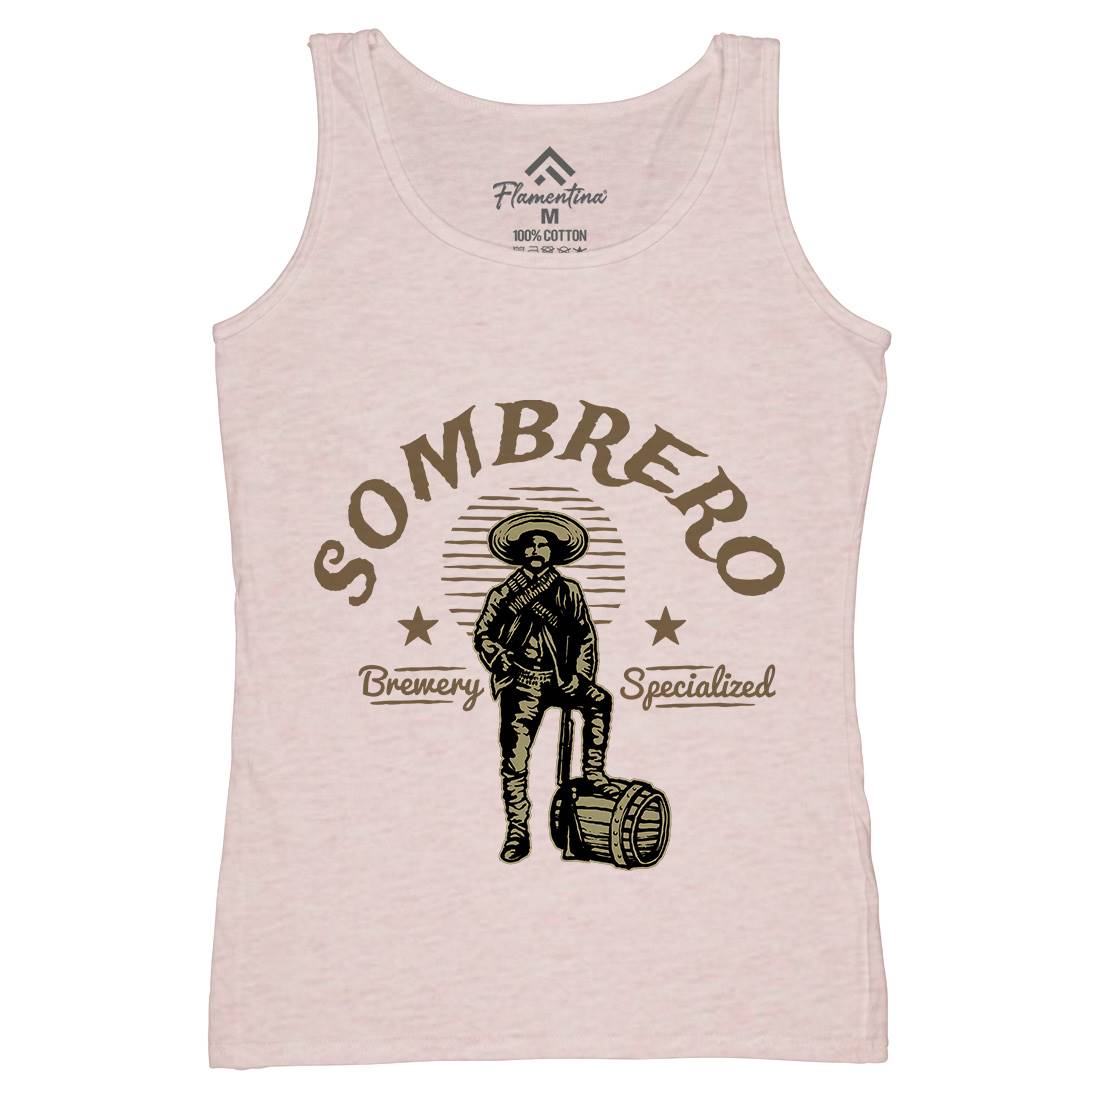 Sombrero Brewery Womens Organic Tank Top Vest American A369